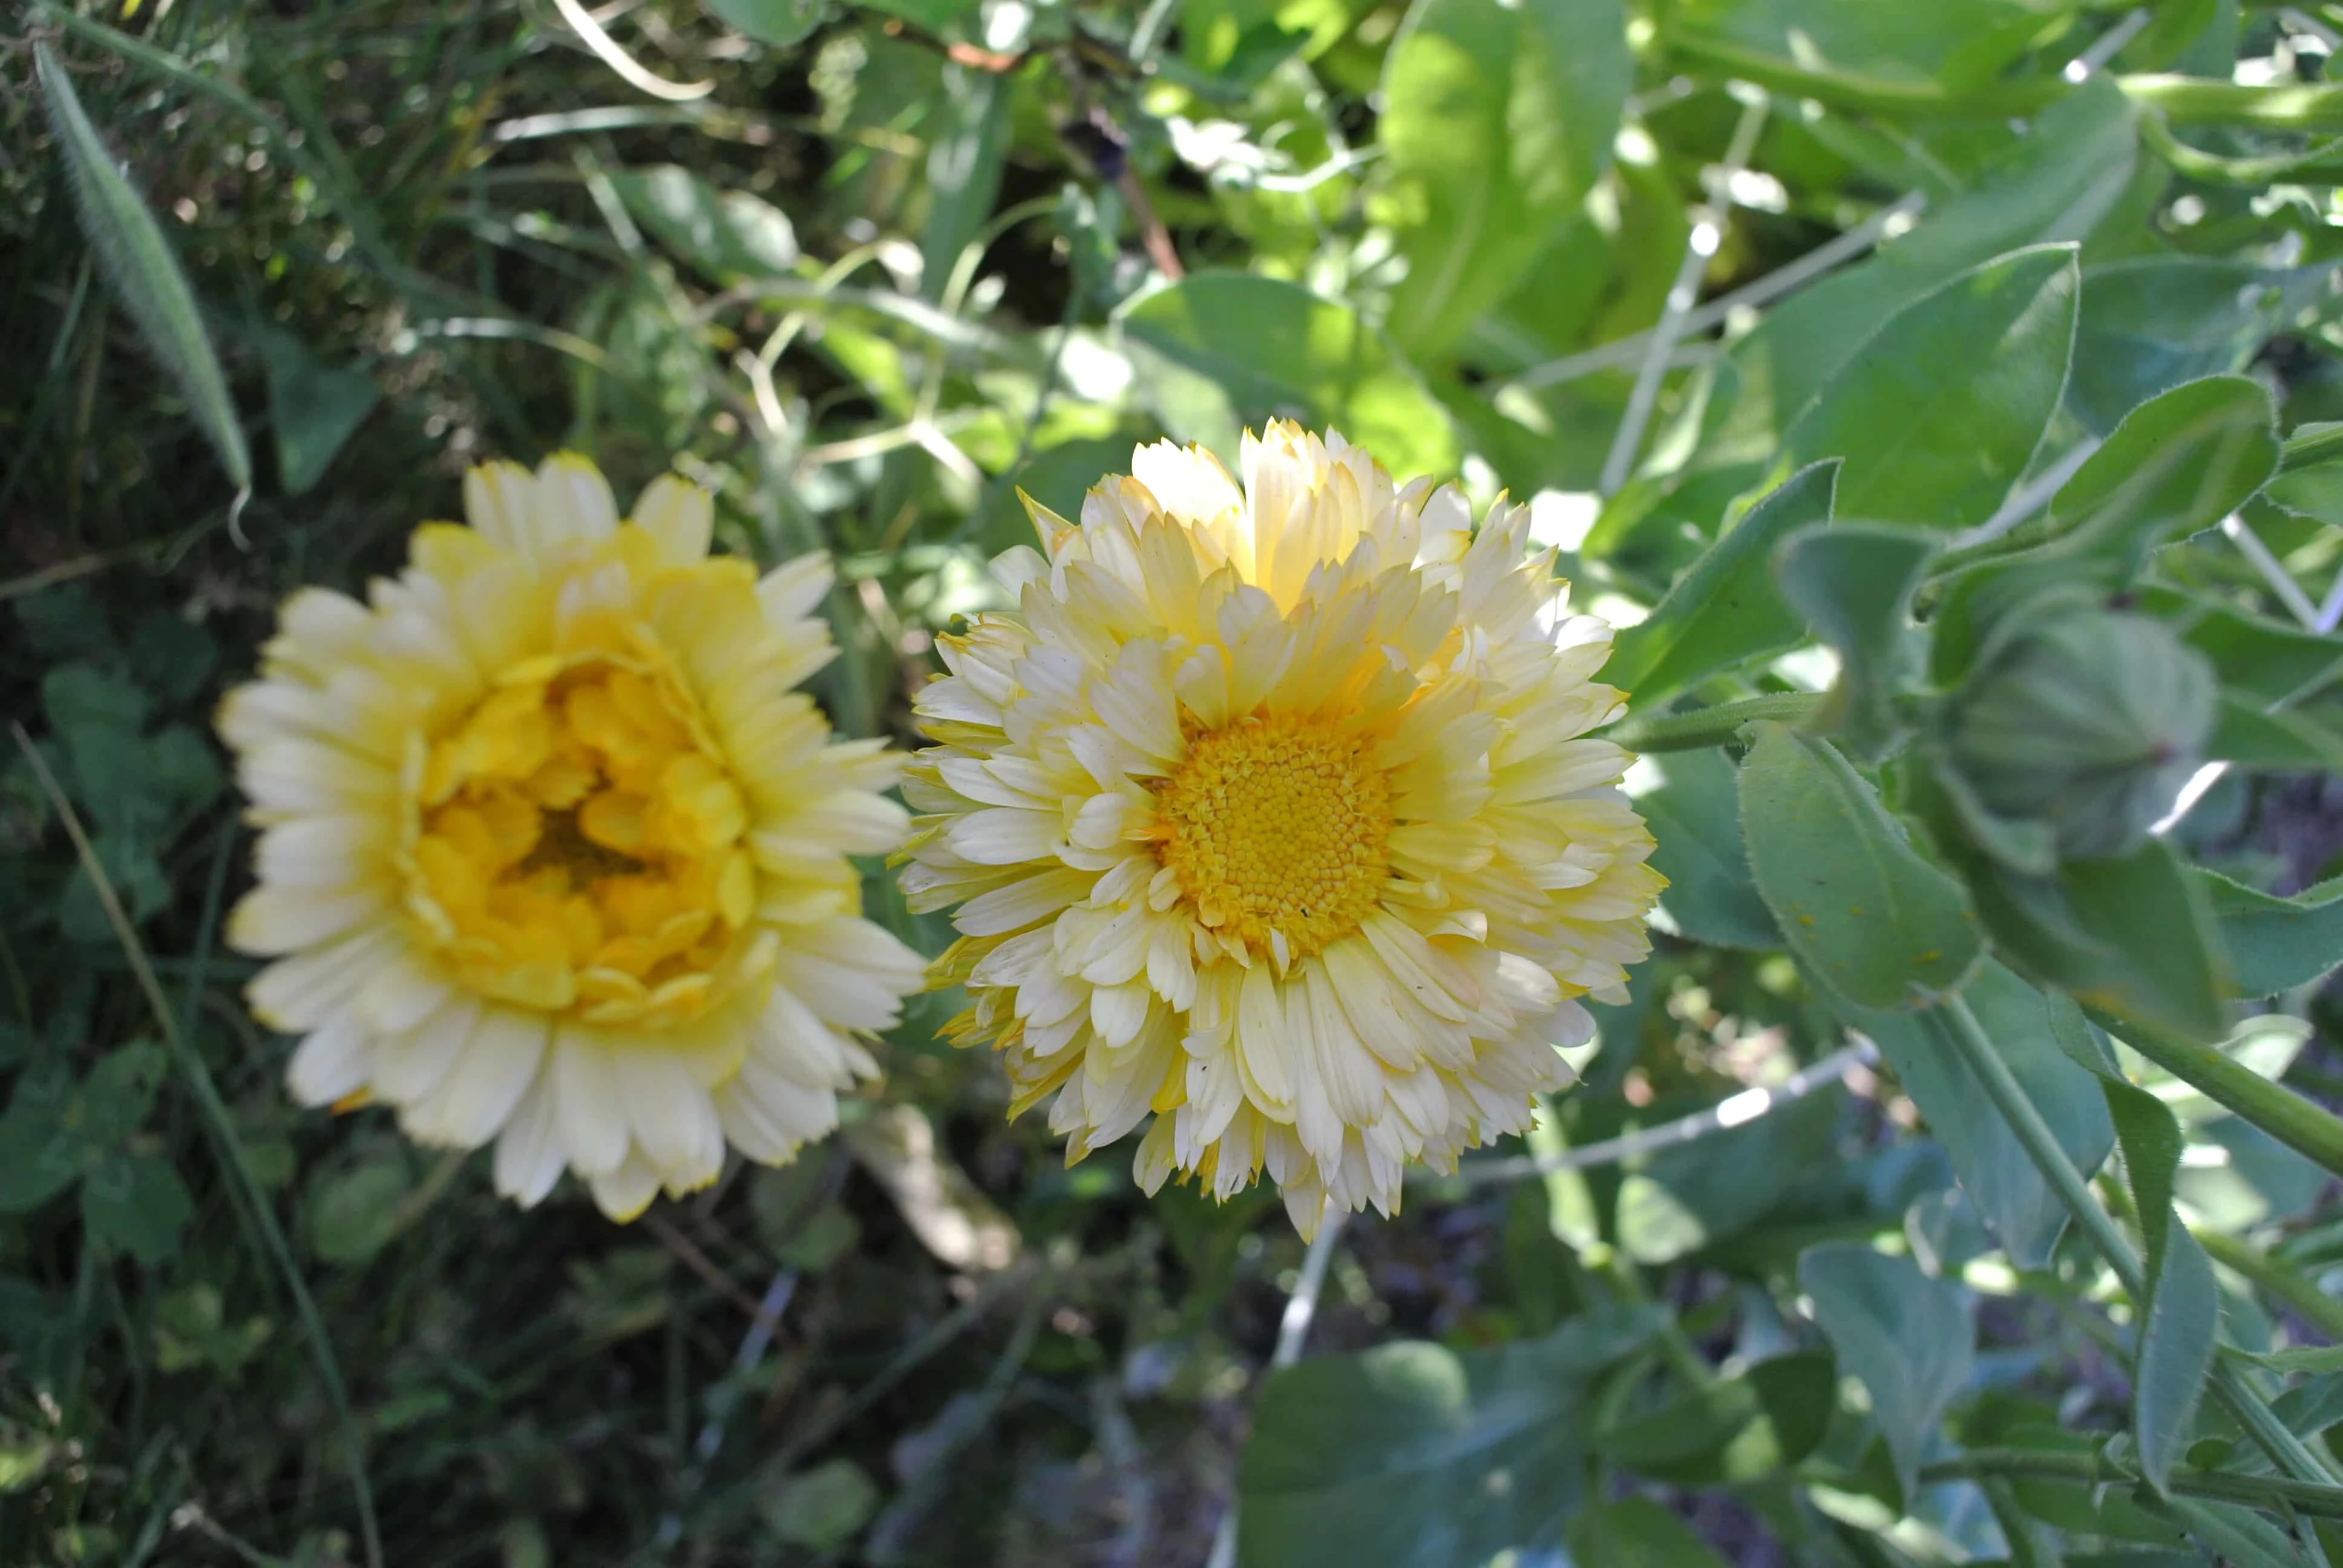 Two yellow calendula flowers in the garden.